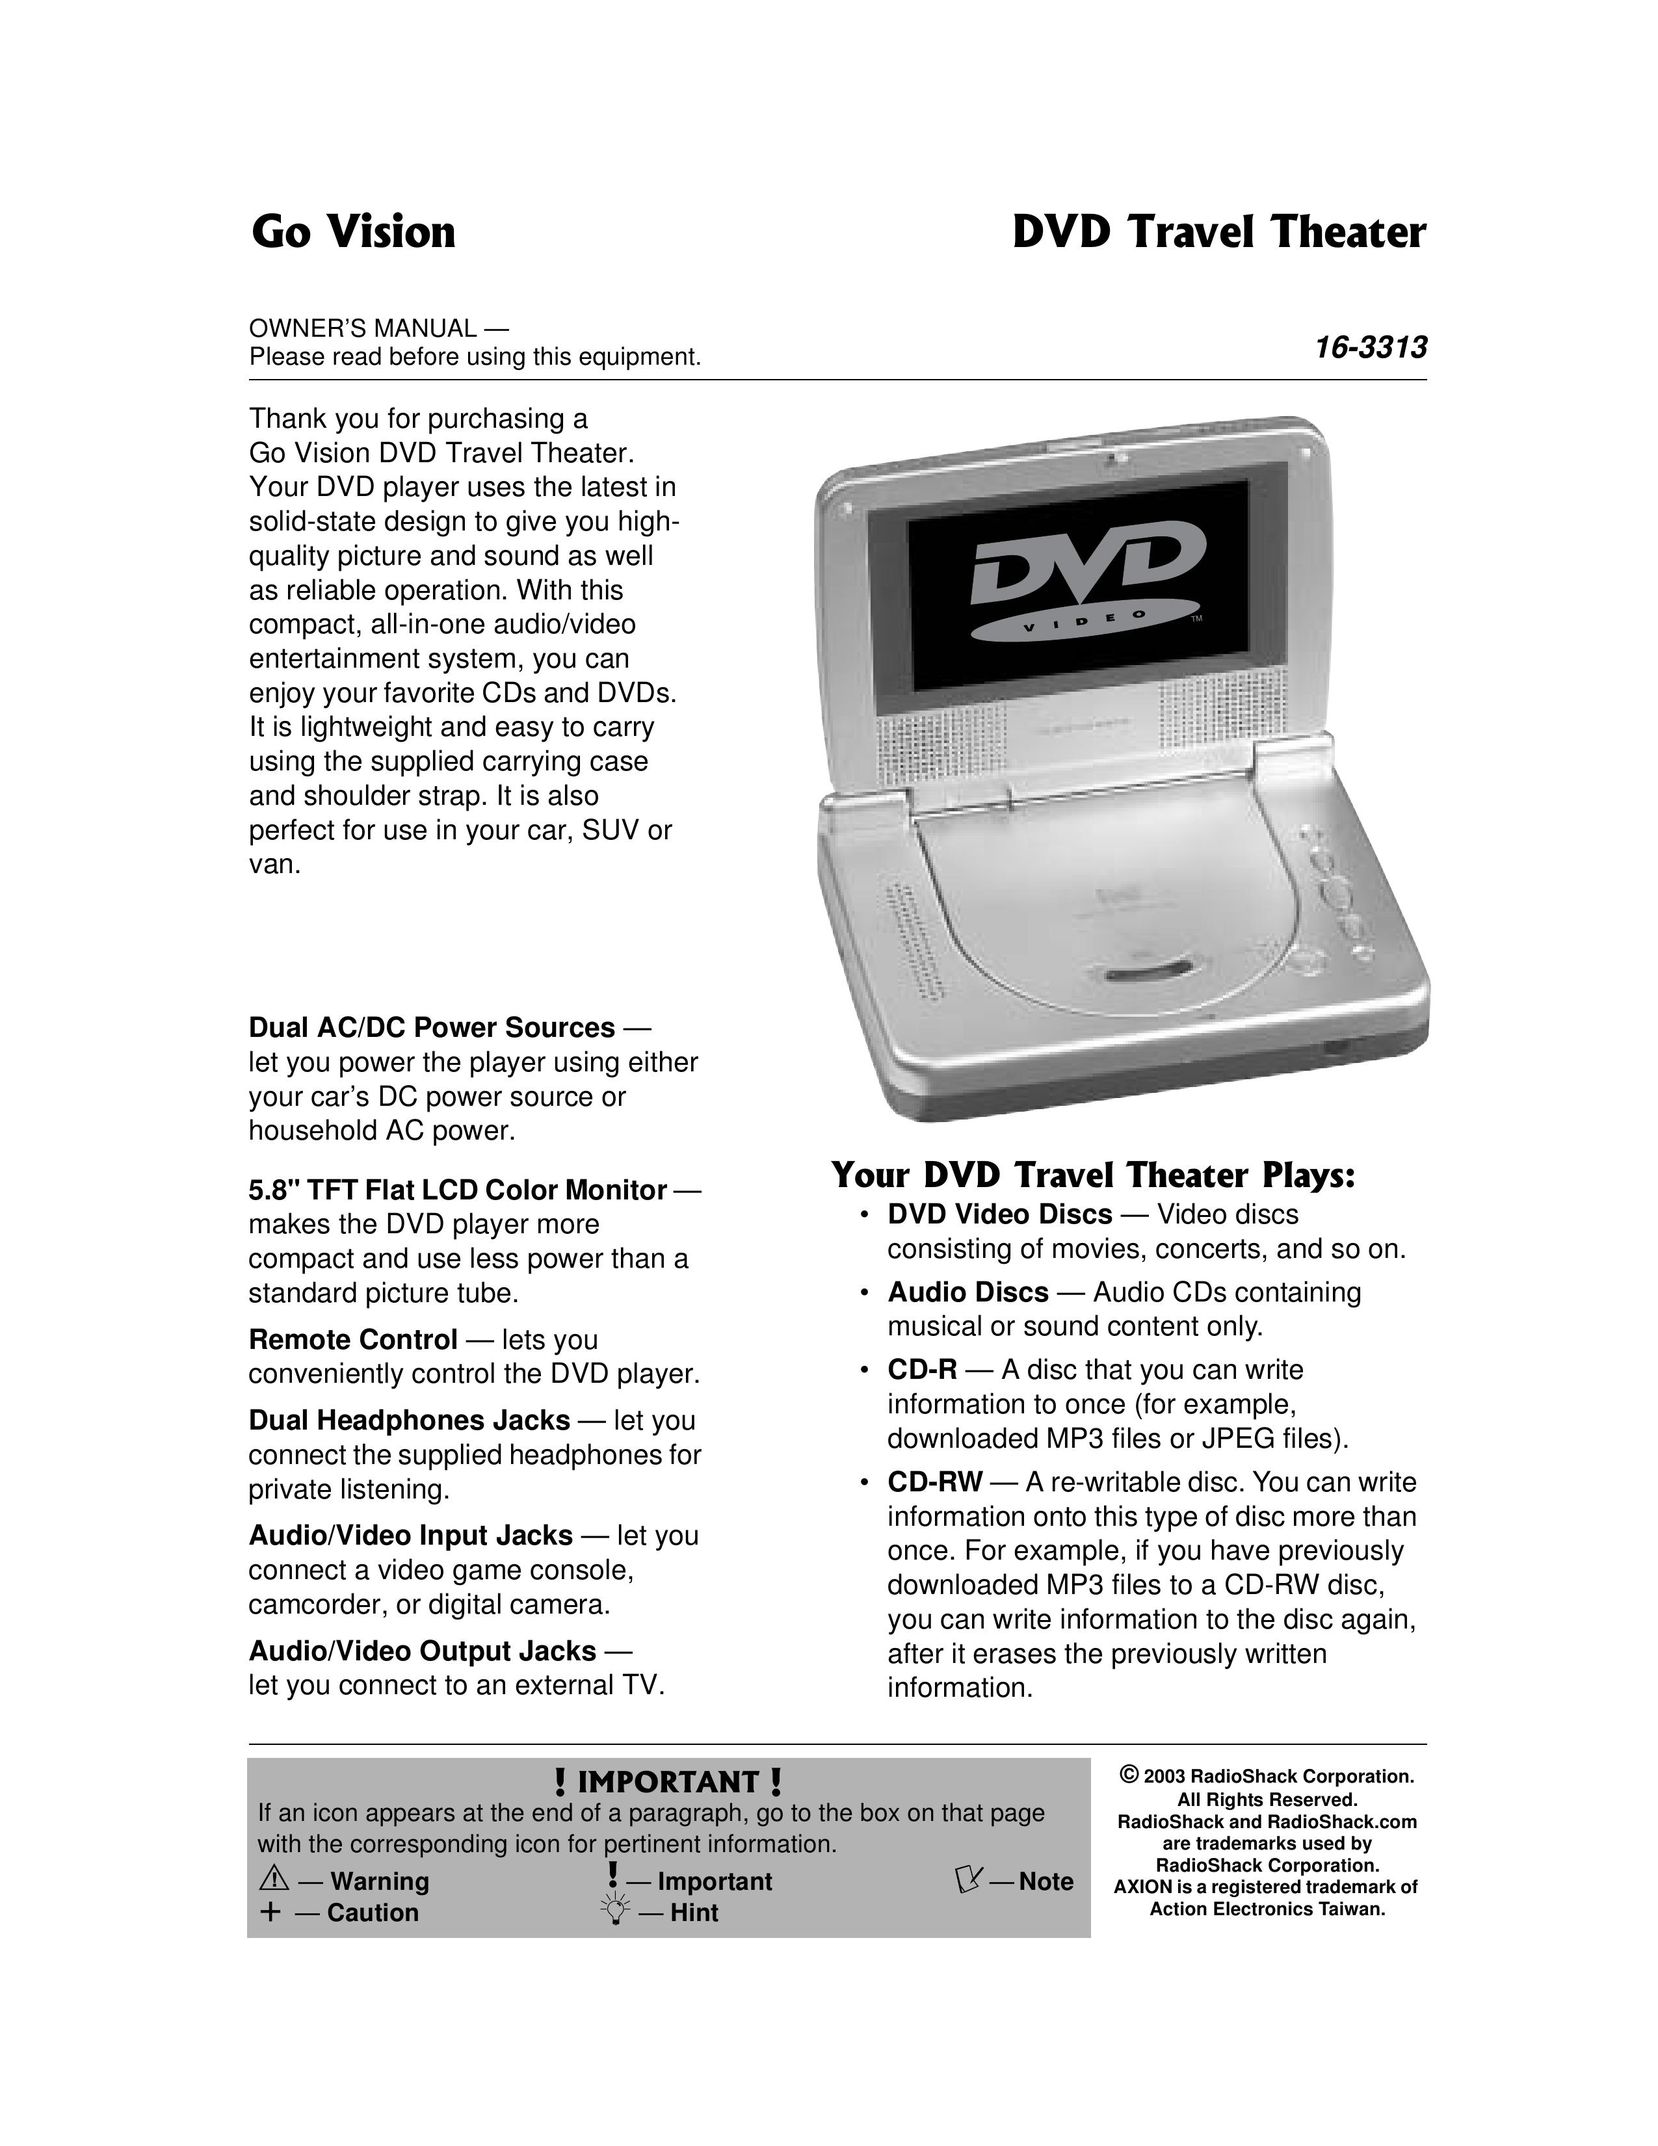 Radio Shack 16-3313 Portable DVD Player User Manual